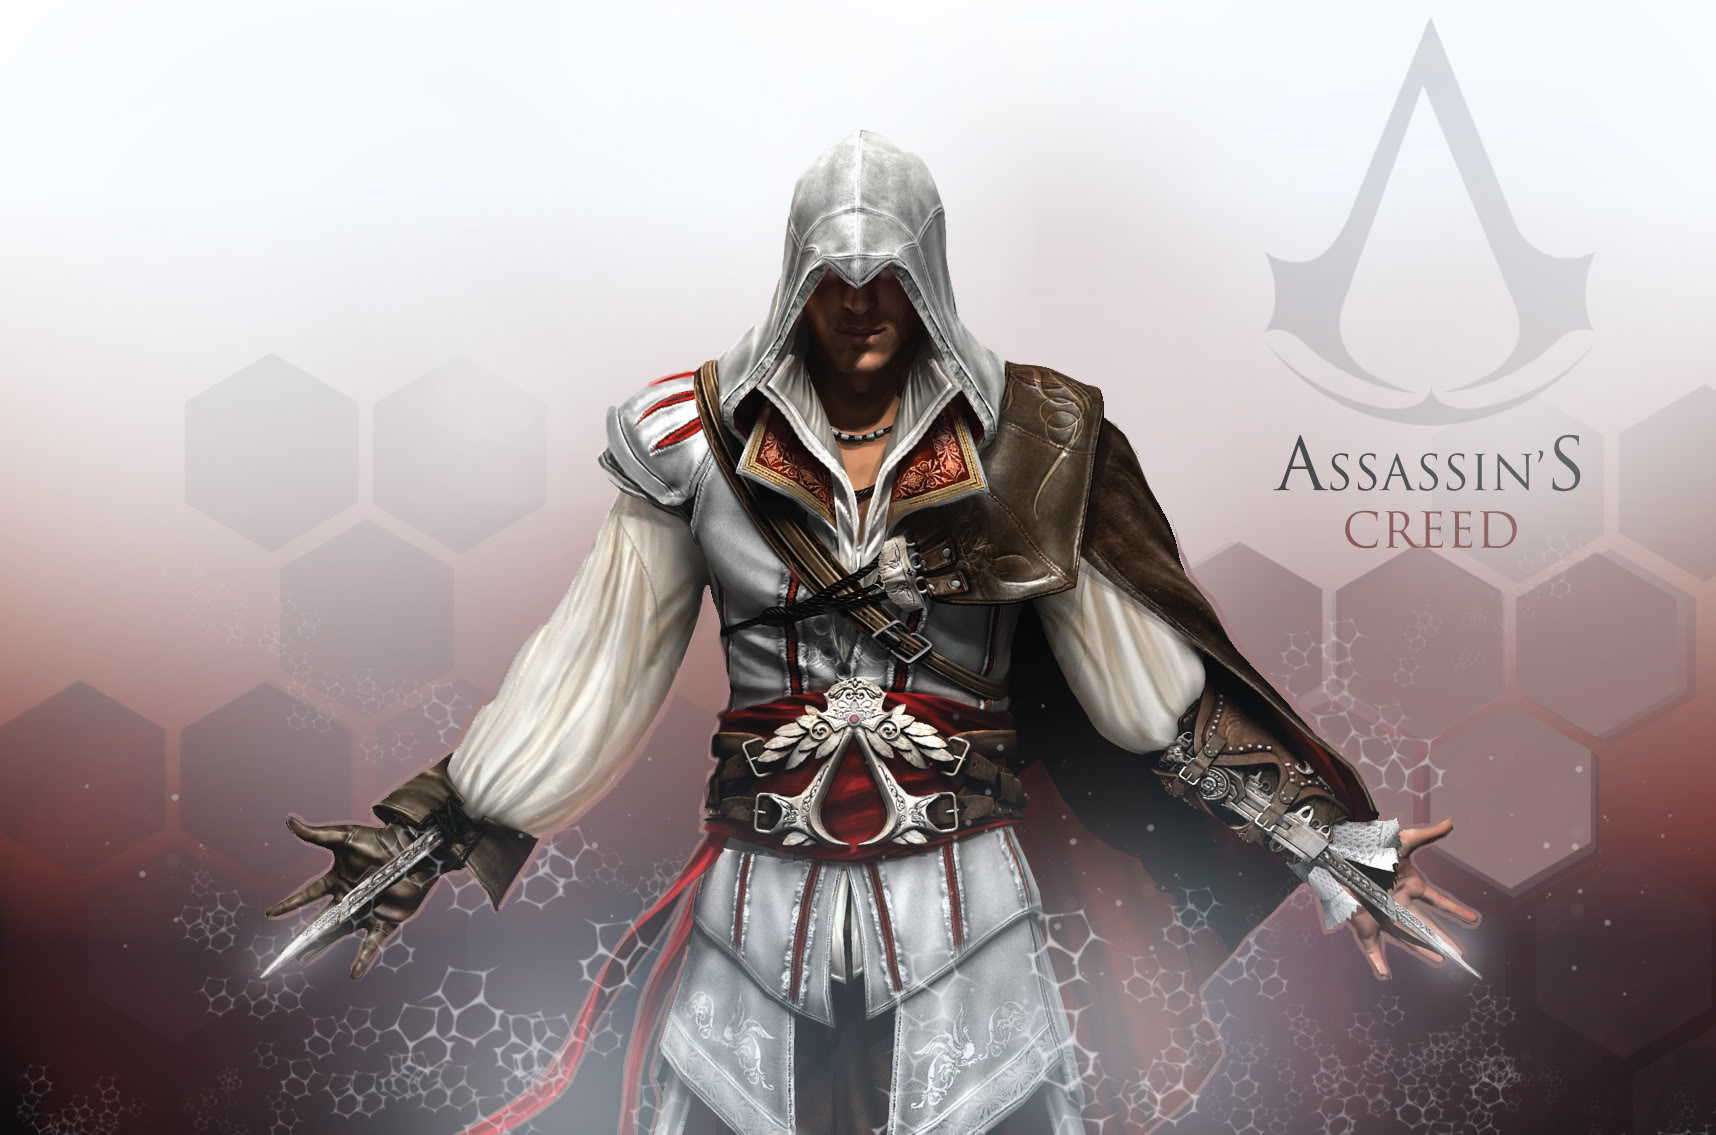 Assassins Creed HD Wallpaper In Games Imageci